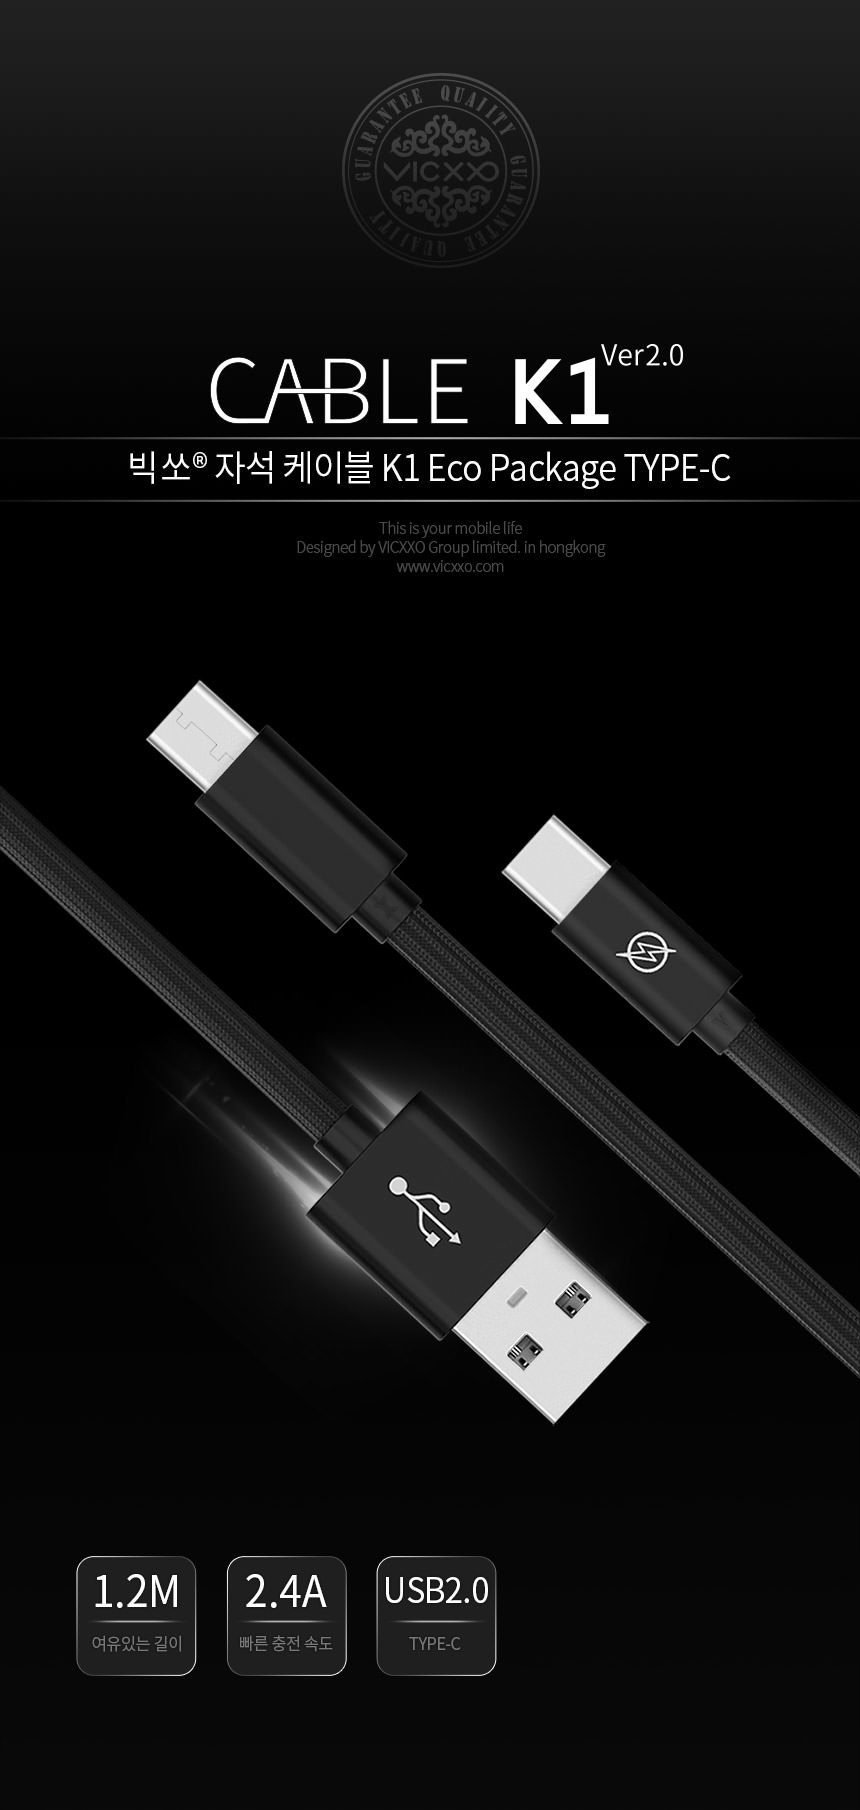 USB-C타입 고속충전 자석 케이블 K1 120cm 블랙 ECO 5,600원 - VICXXO 디지털, 모바일 액세서리, 케이블/젠더, 멀티케이블 바보사랑 USB-C타입 고속충전 자석 케이블 K1 120cm 블랙 ECO 5,600원 - VICXXO 디지털, 모바일 액세서리, 케이블/젠더, 멀티케이블 바보사랑